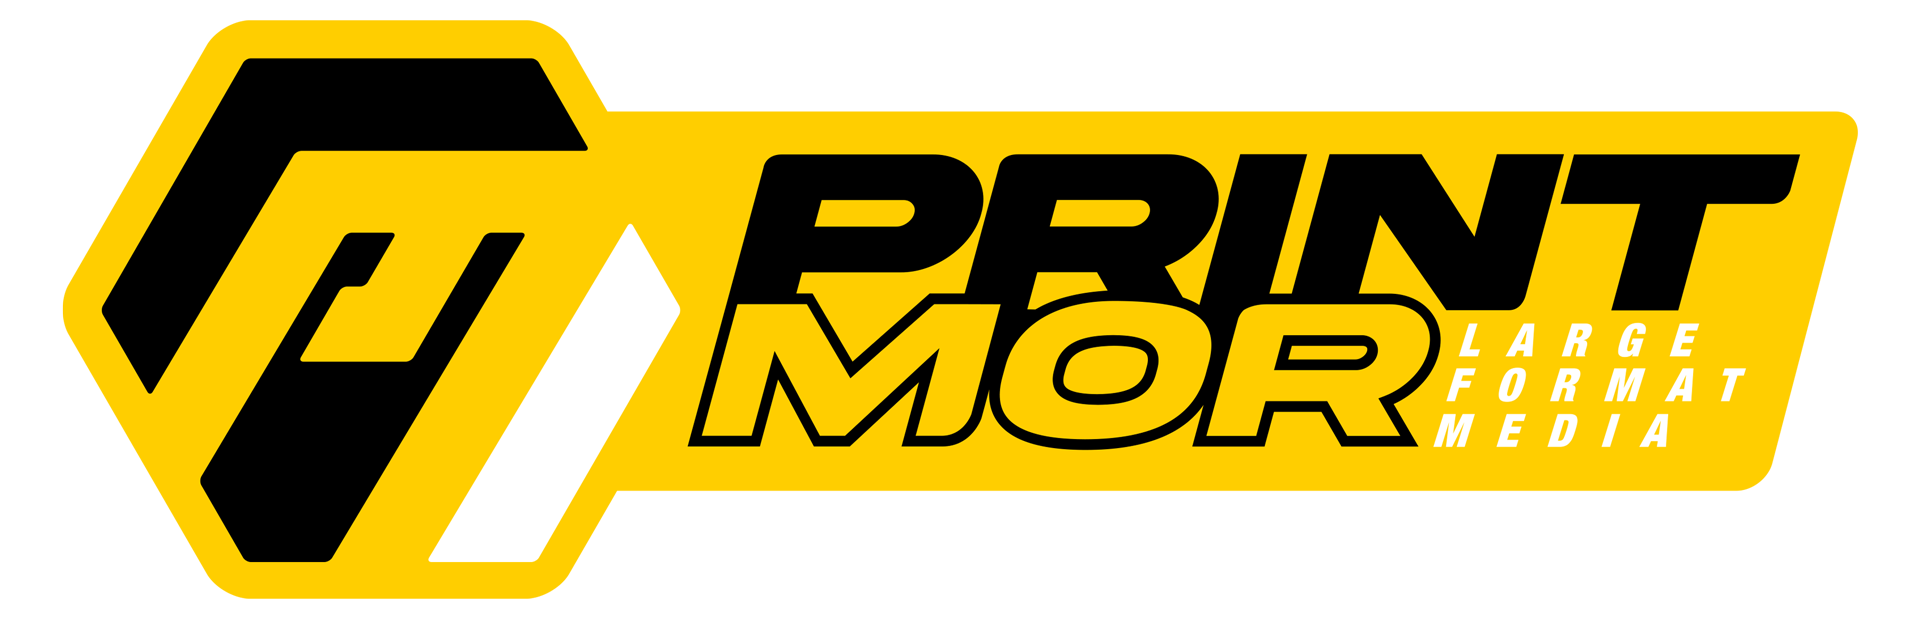 Printmor-header-cropped-Logo-Hor-shade-yellow